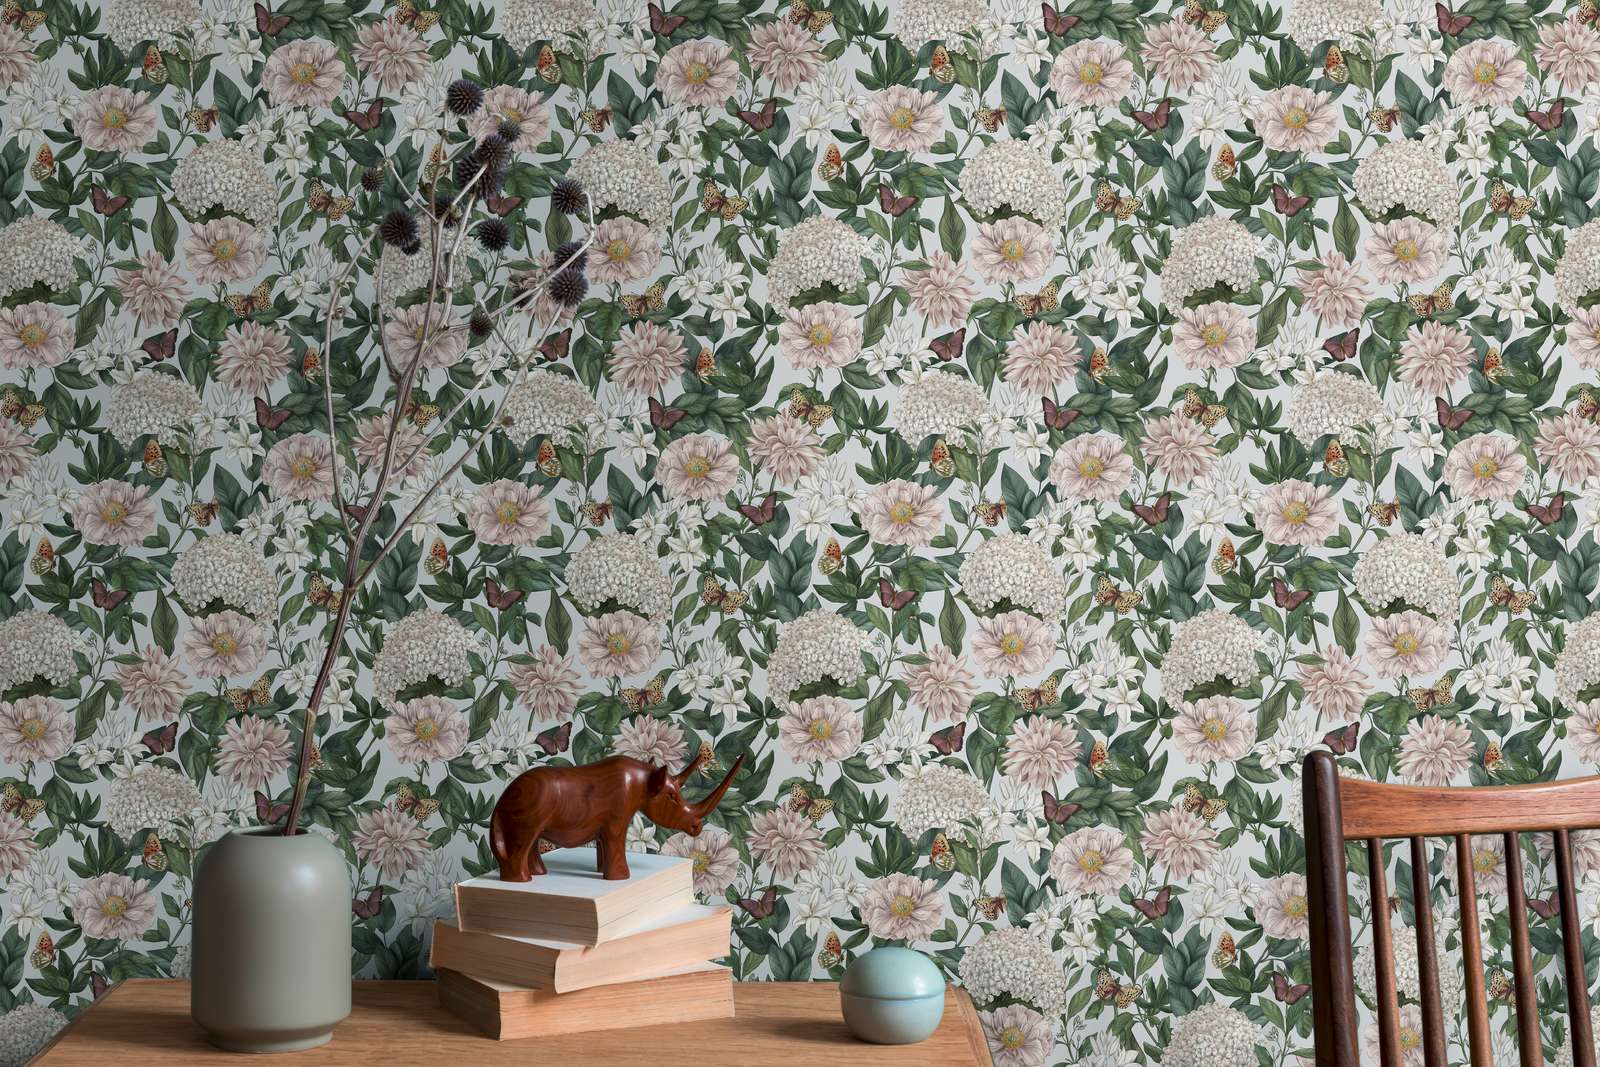             Modern wallpaper floral with animals & flowers textured matt - light grey, white, dark green
        